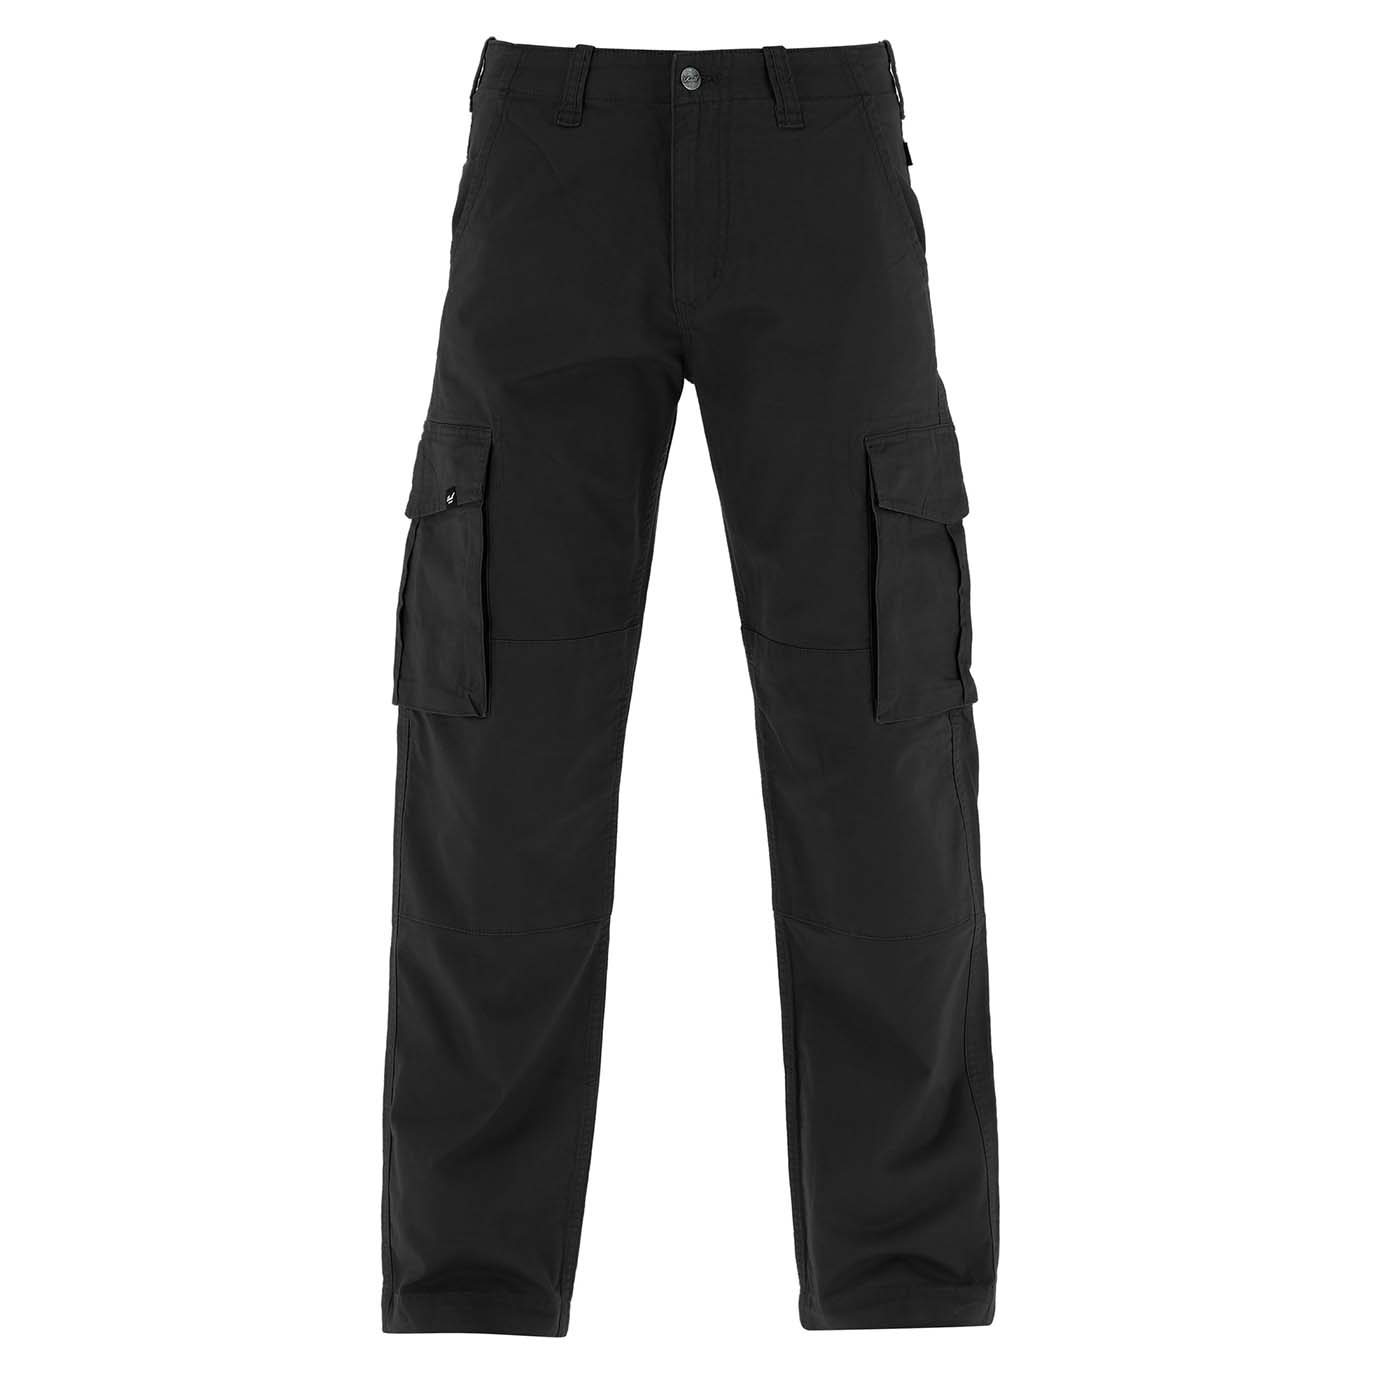 Reell Jeans Flex Cargo LC Pant Black